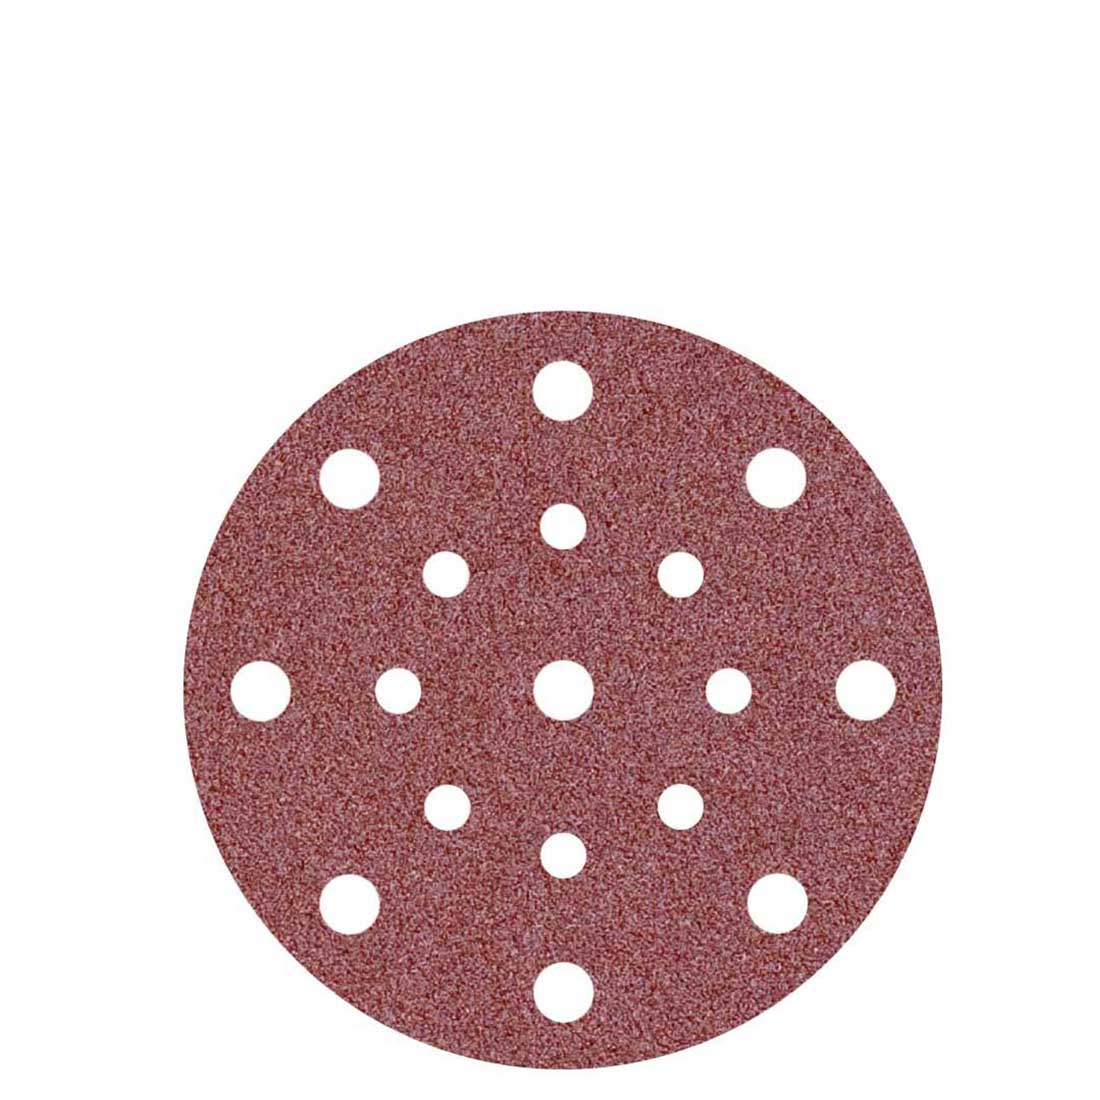 MioTools hook & loop sanding discs for random orbital sanders, G24–240, Ø 150 mm / 17 hole / aluminium oxide